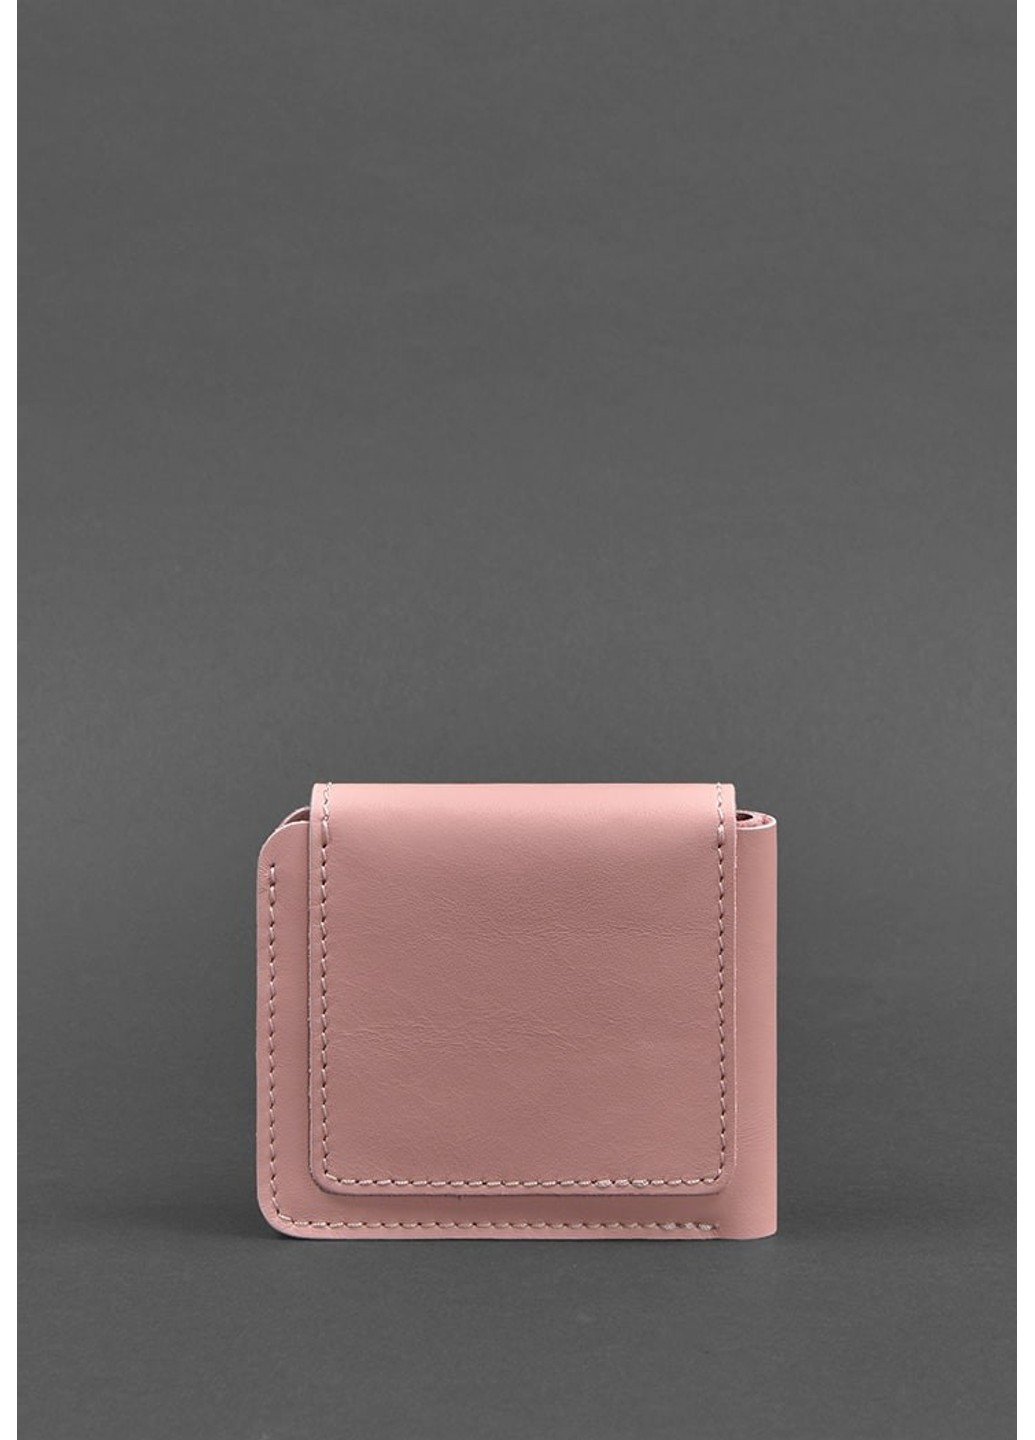 Женское кожаное портмоне 4.2 на кнопке розовое BN-PM-4-2-PINK-PEACH BlankNote (263519285)